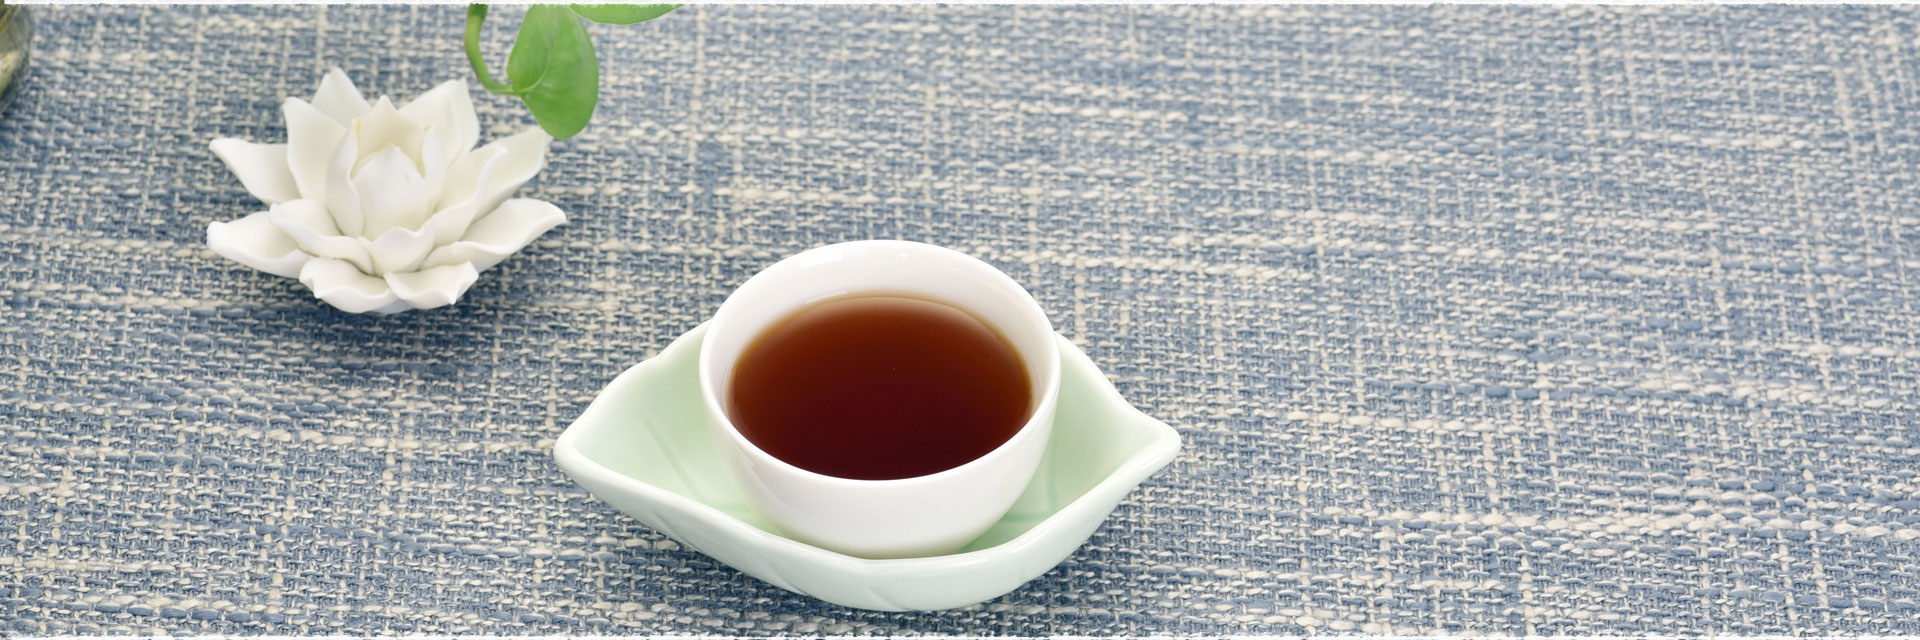 How to Brew an Enjoyable Pu-erh Tea